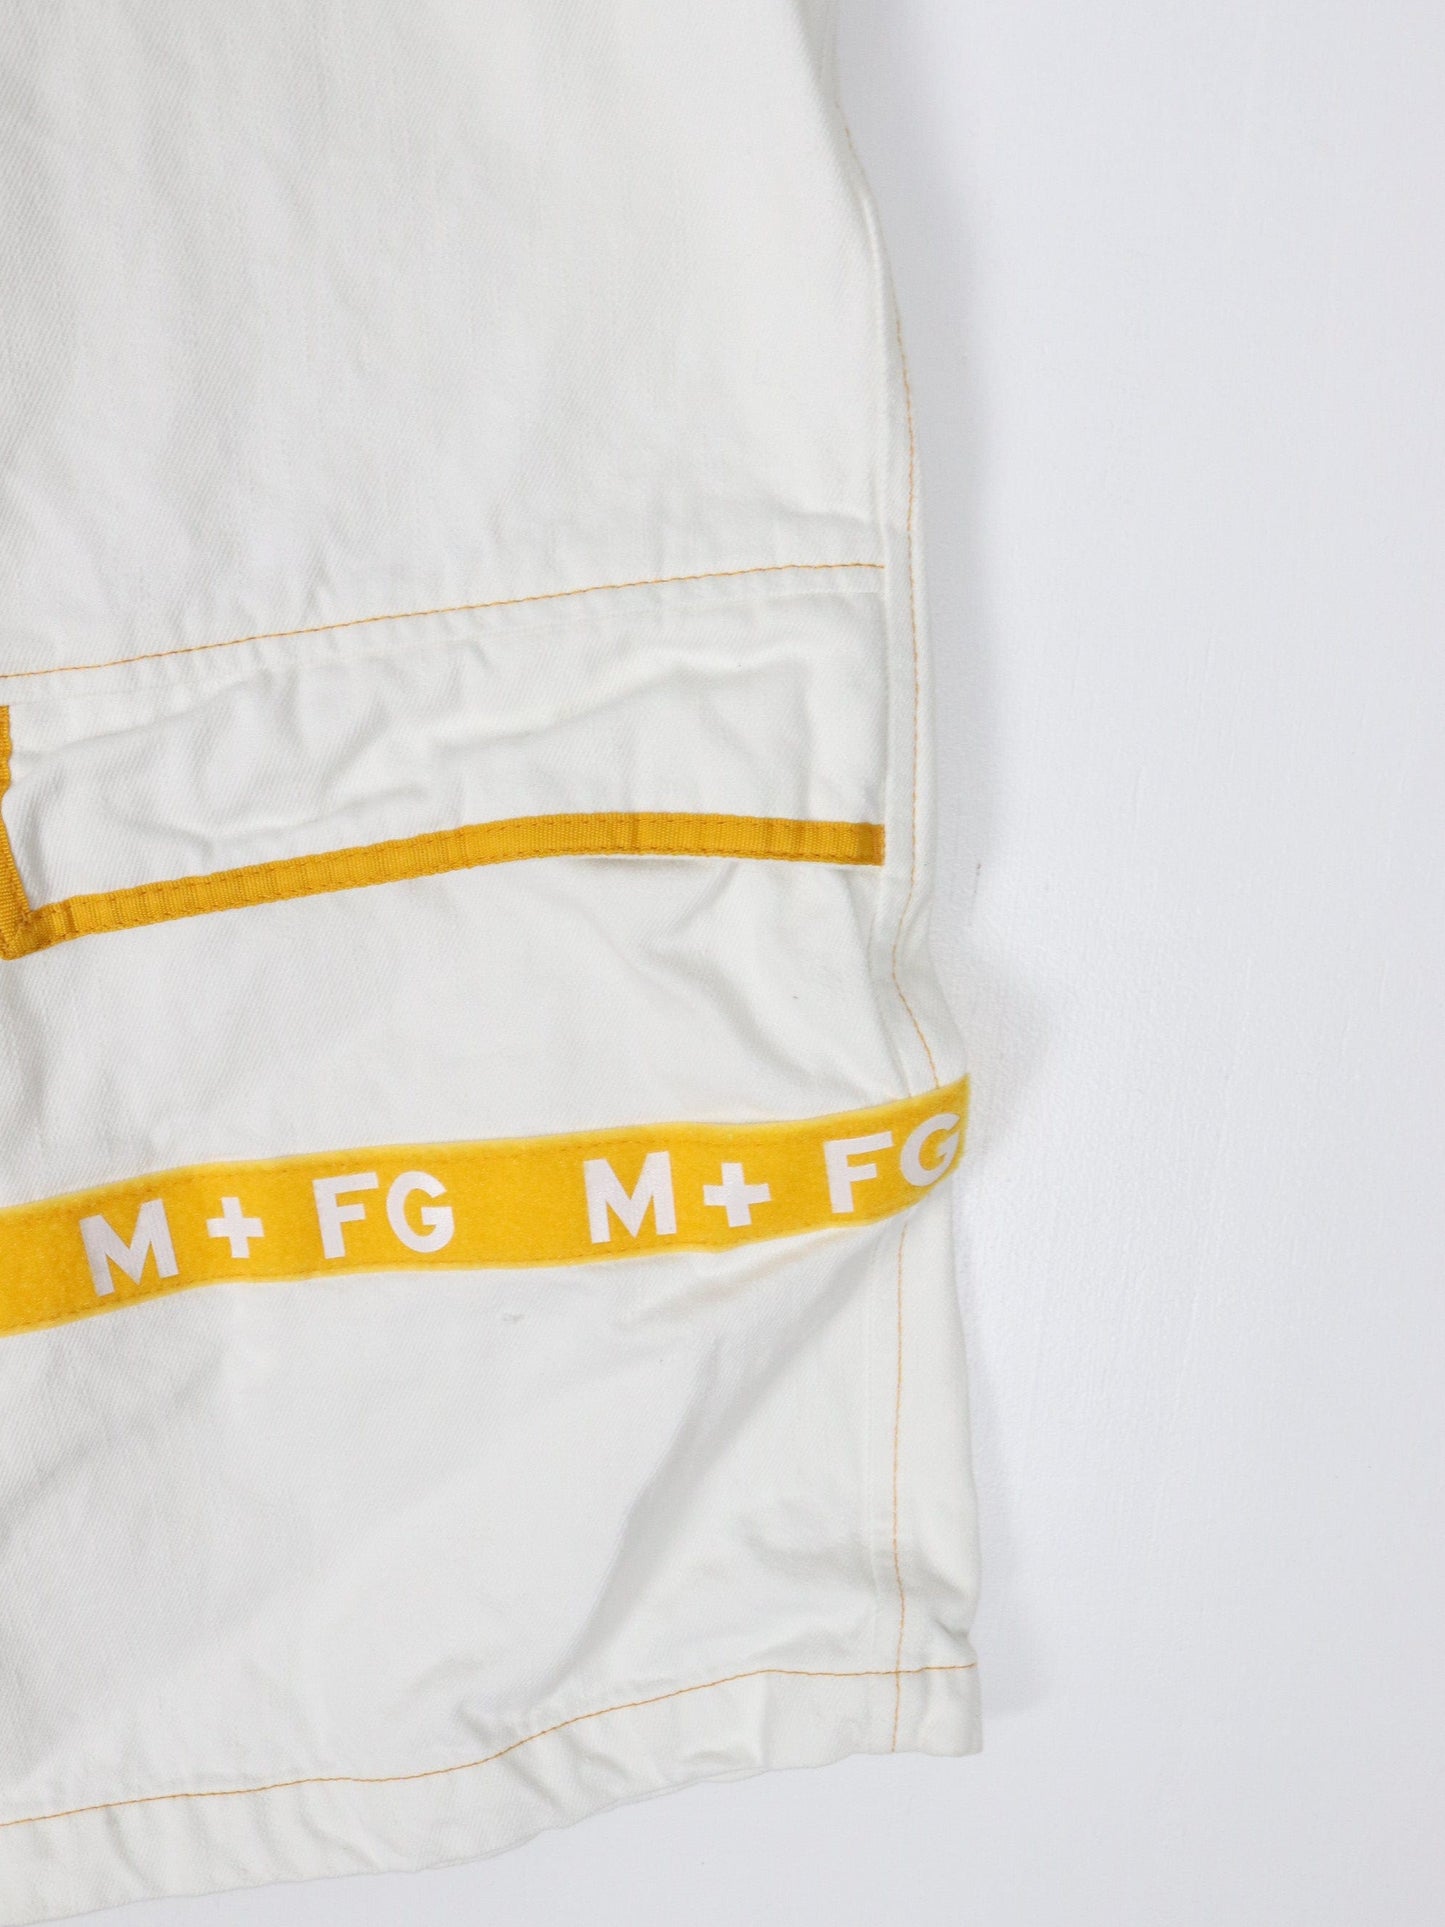 Girbaud Shorts Vintage Marithe Francios Girbaud Shorts Mens 38 White Y2K Denim Baggy